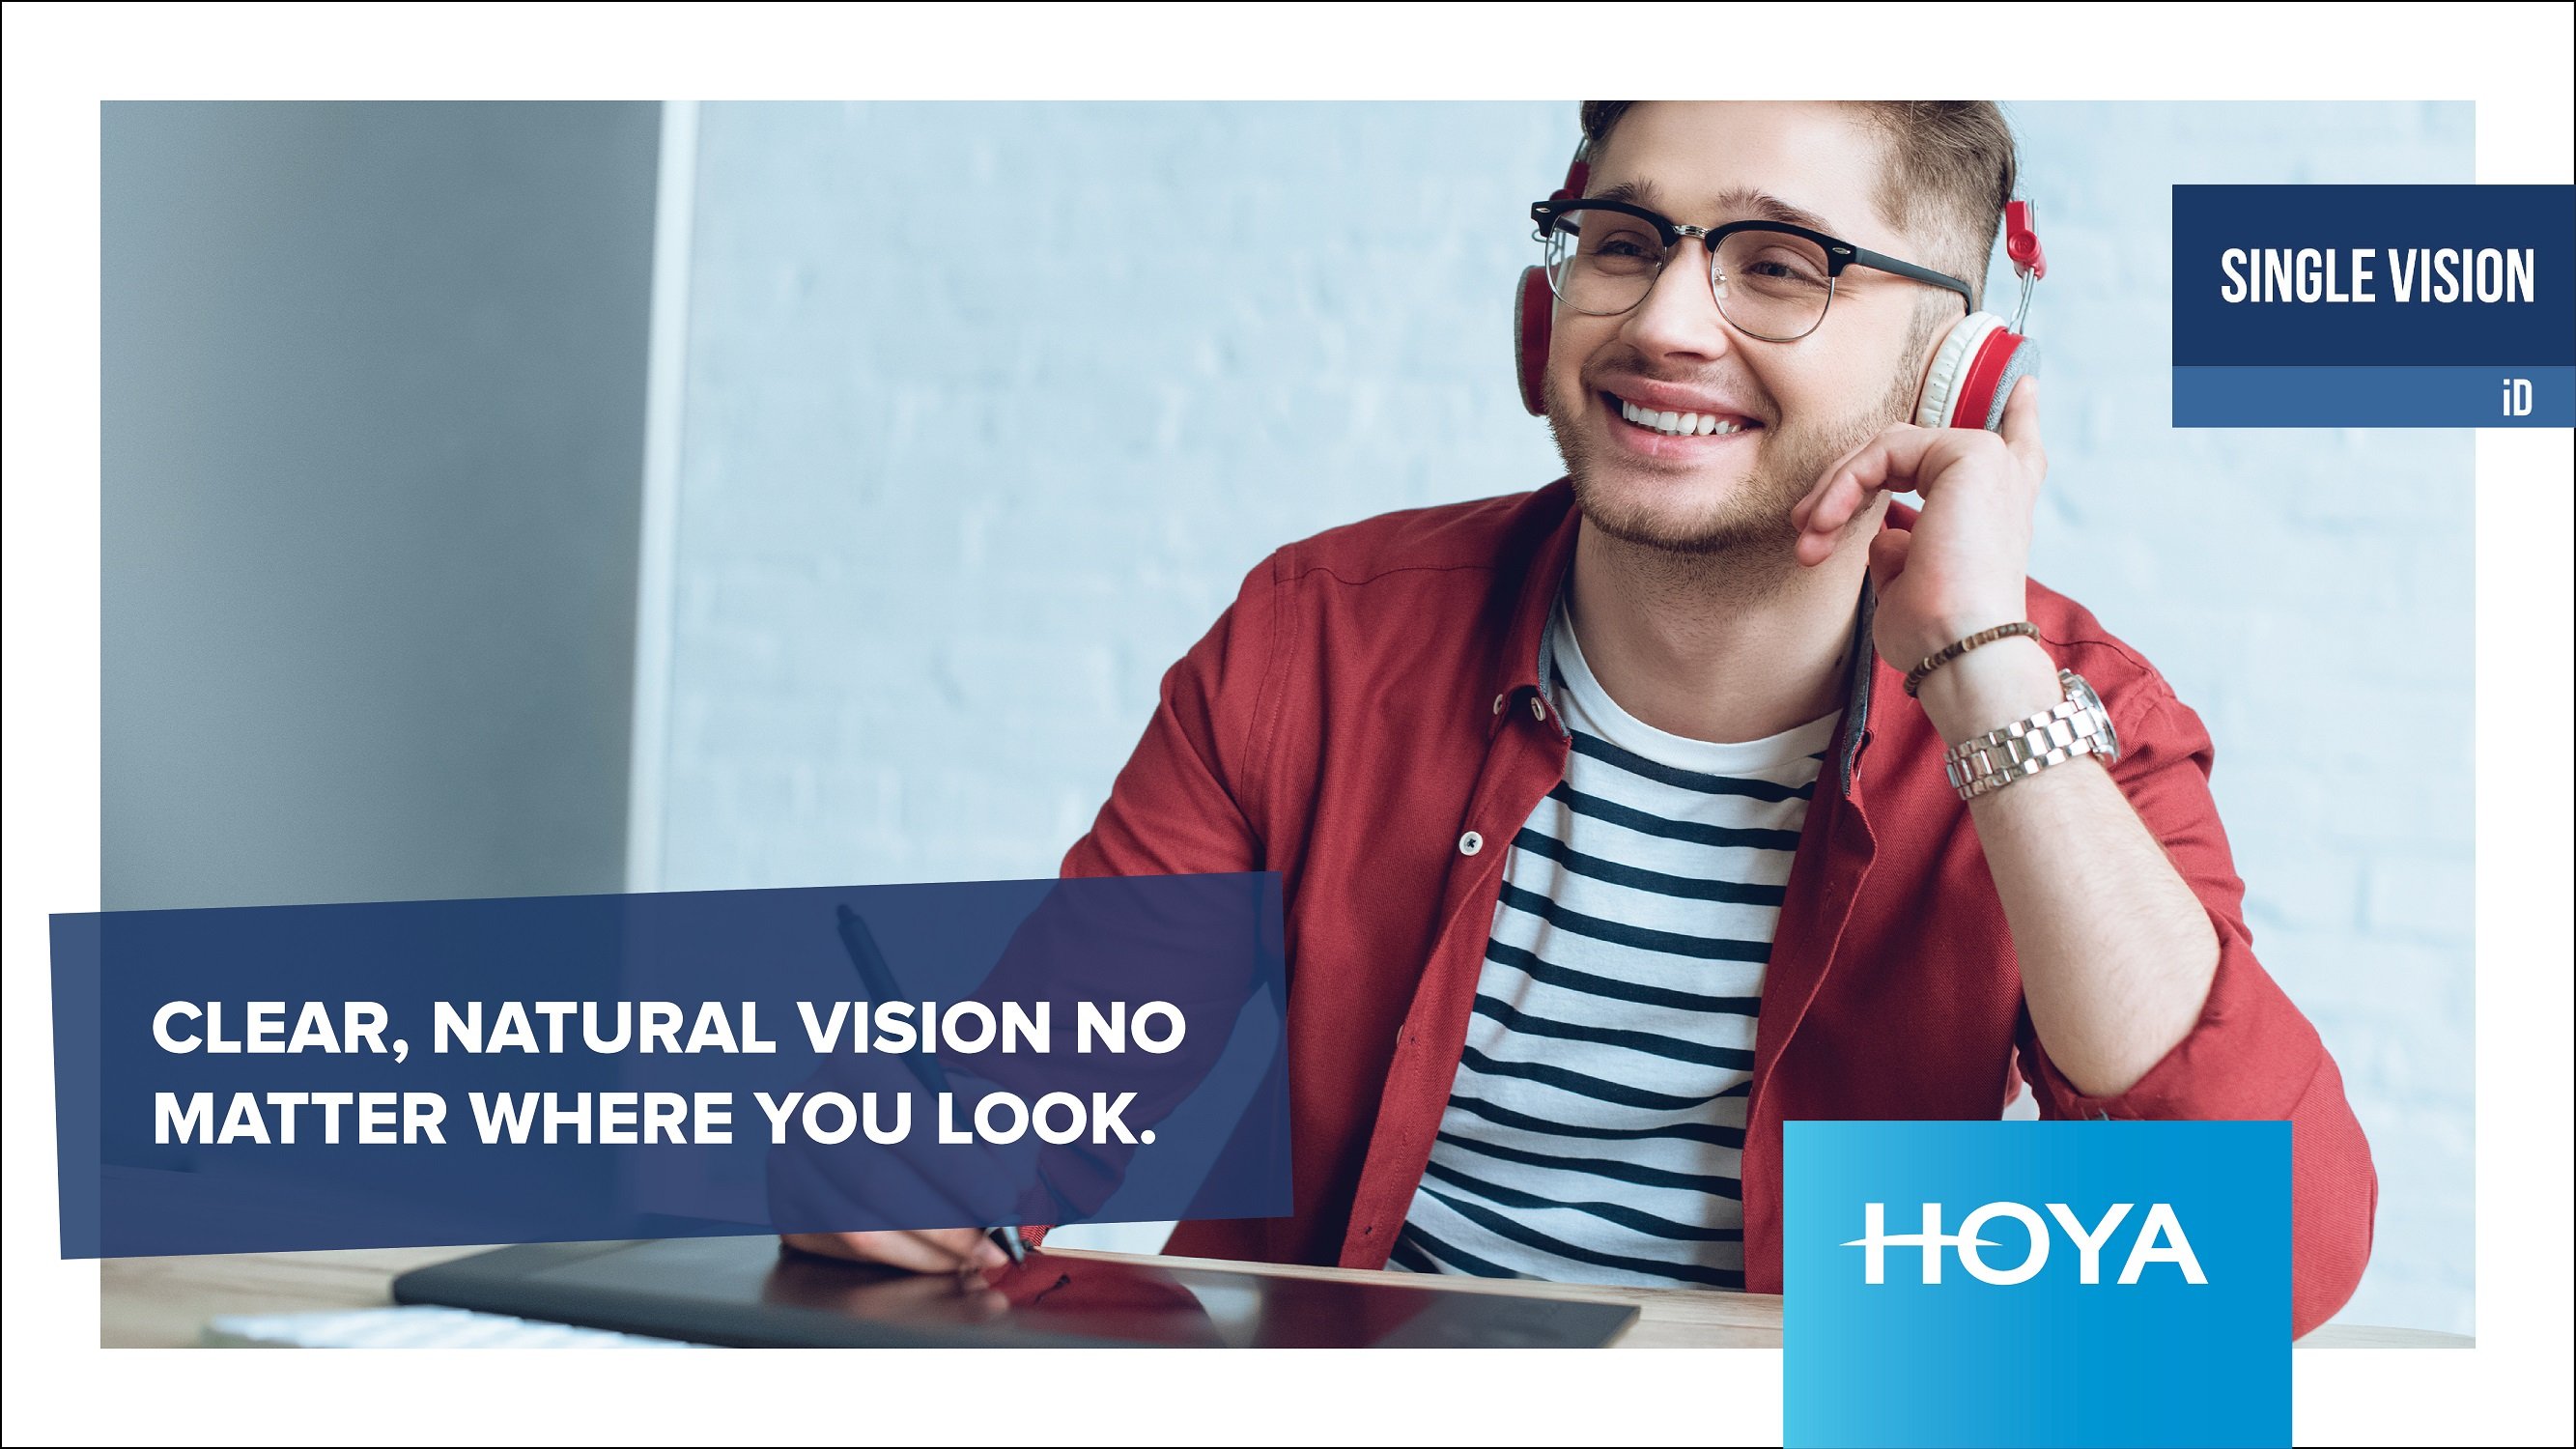 Hoya single vision id